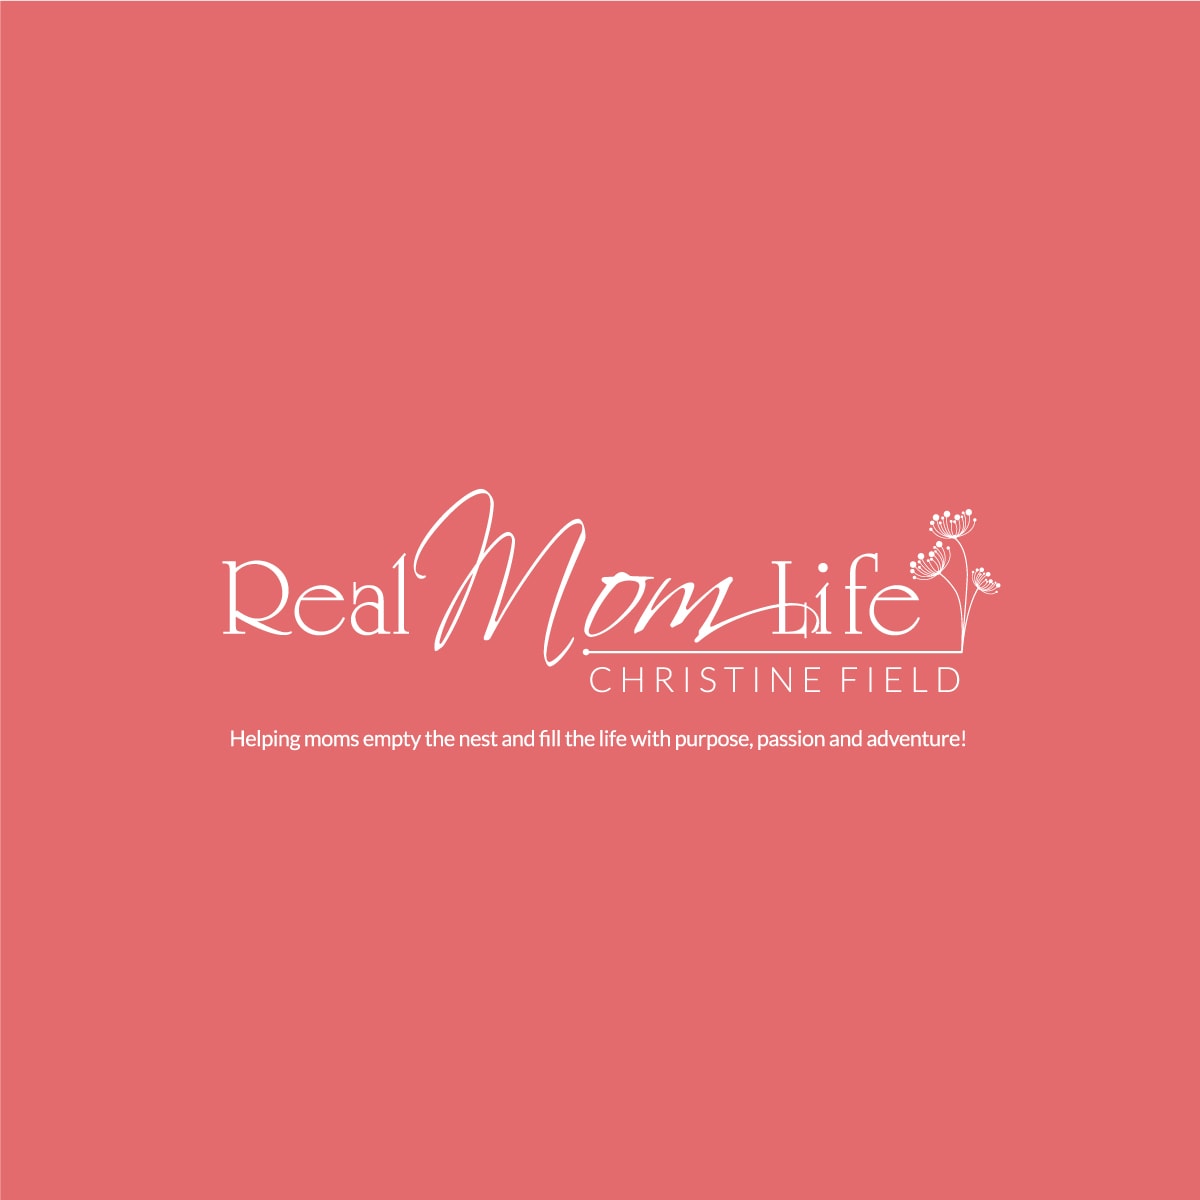 Real Mom Life Blog Main Logo white on dark background